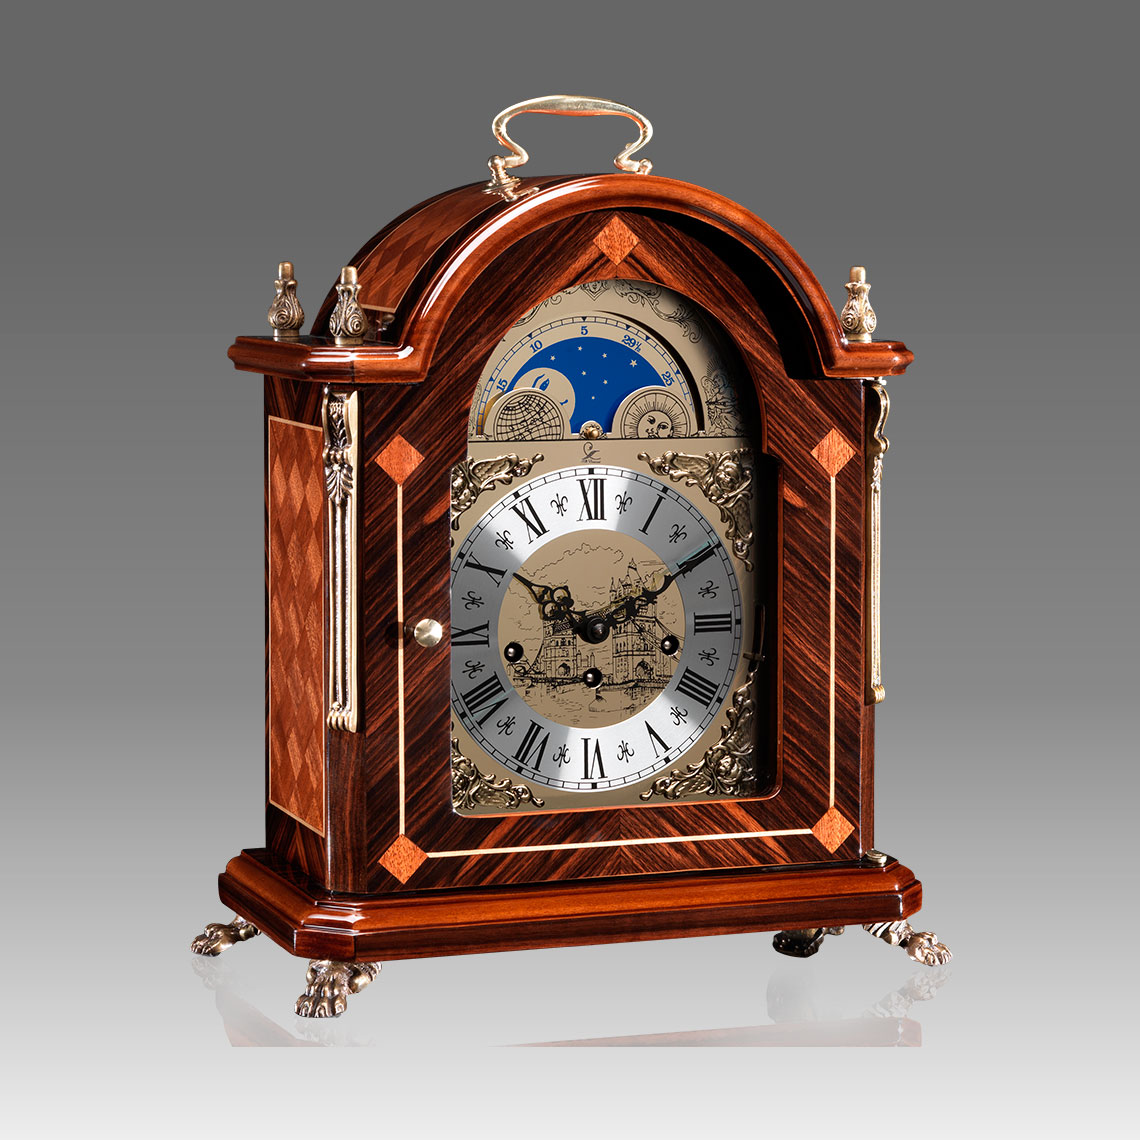 Mante Clock, Table Clock, Cimn Clock, Art.321/6 Ebony and mahogany sipo - Westminster melody on rod gong, moon fase dial